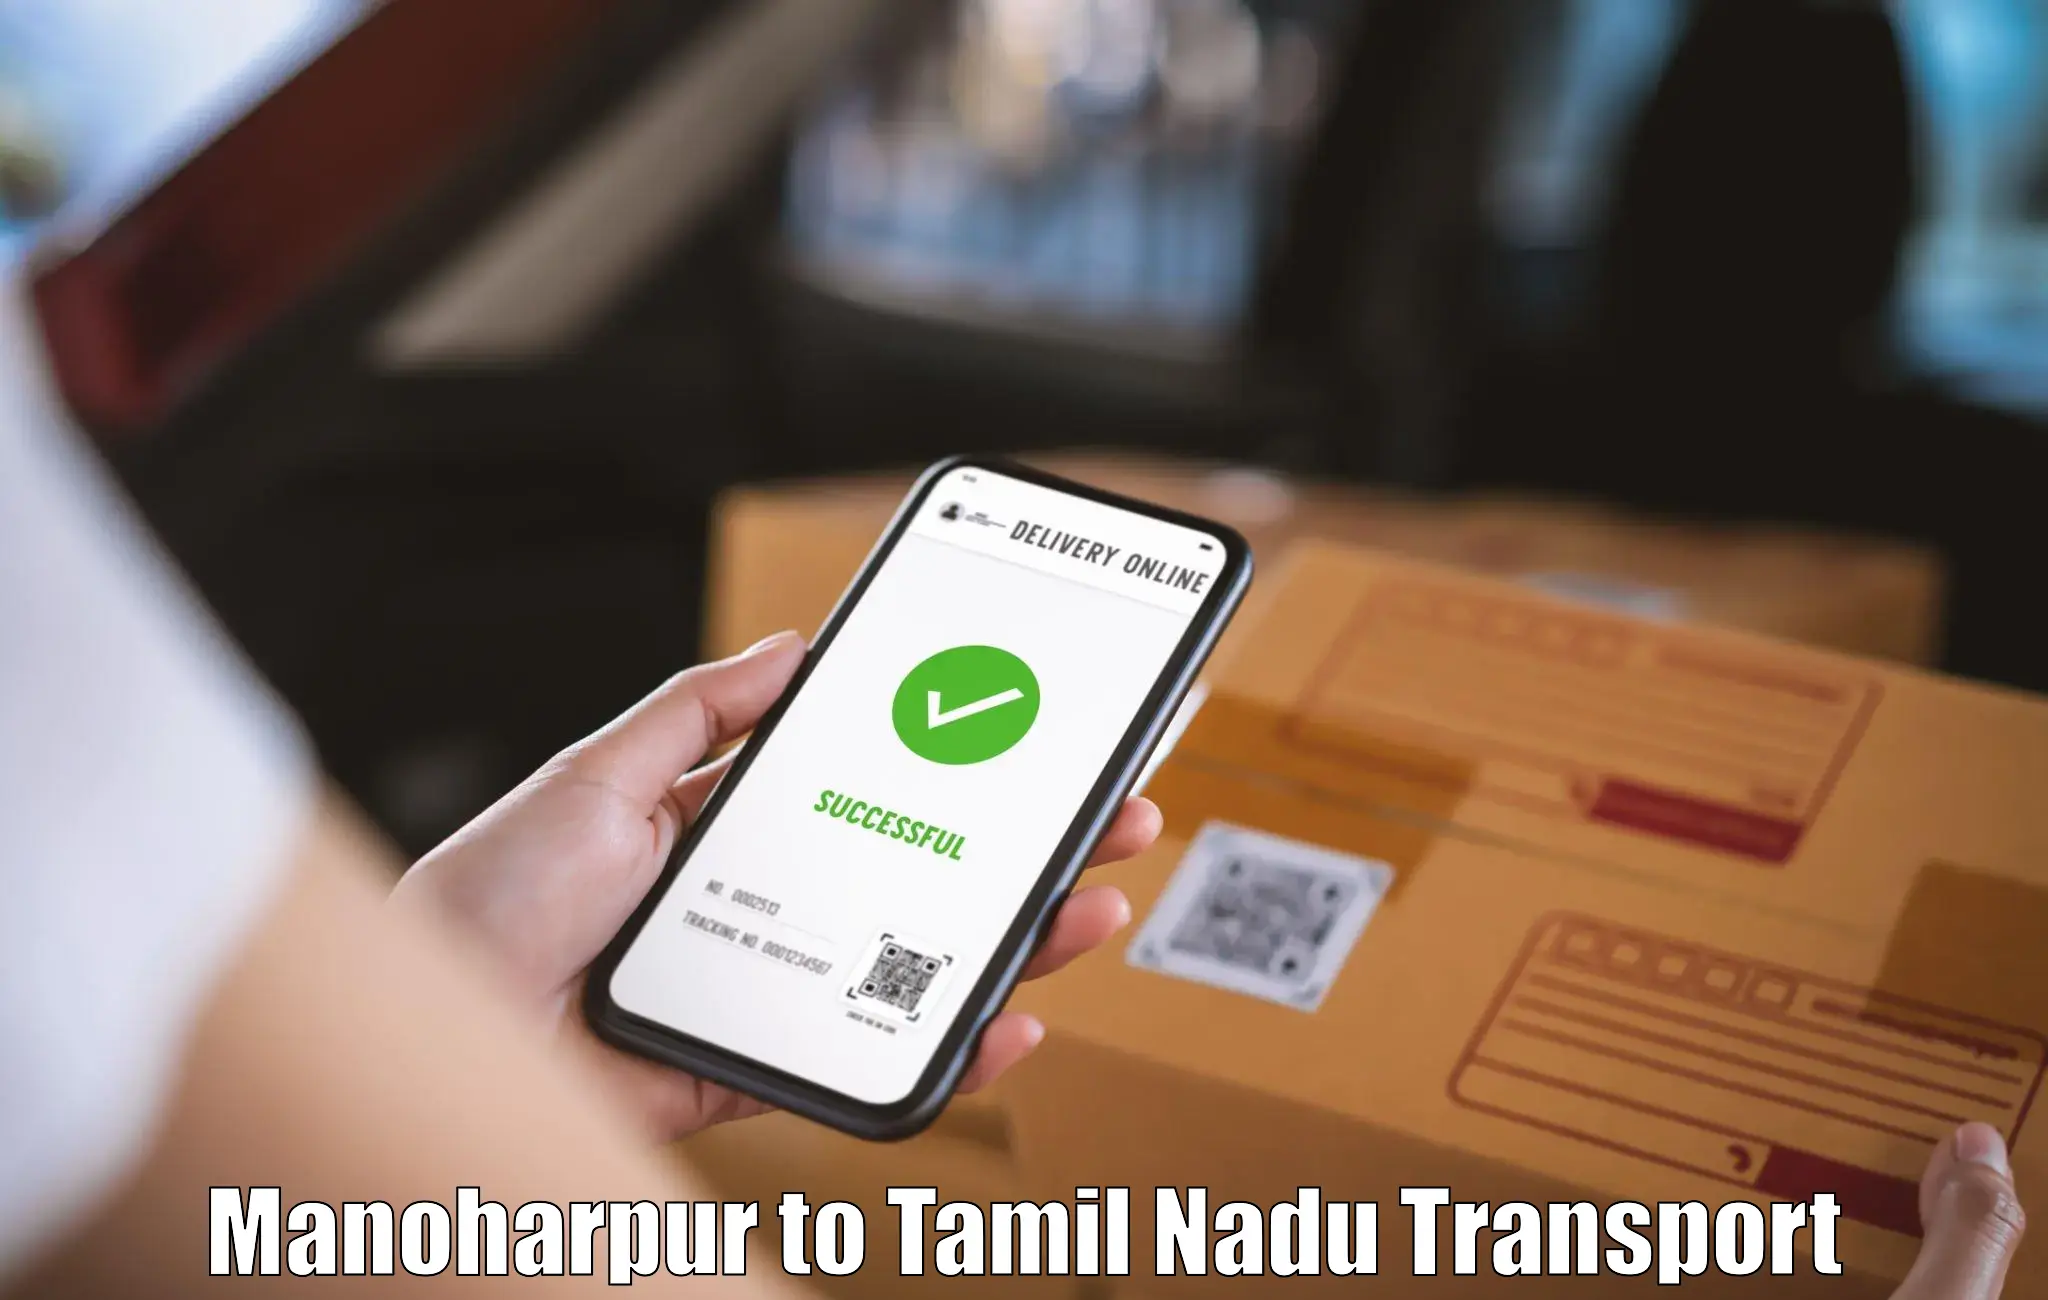 Online transport service Manoharpur to Anthiyur